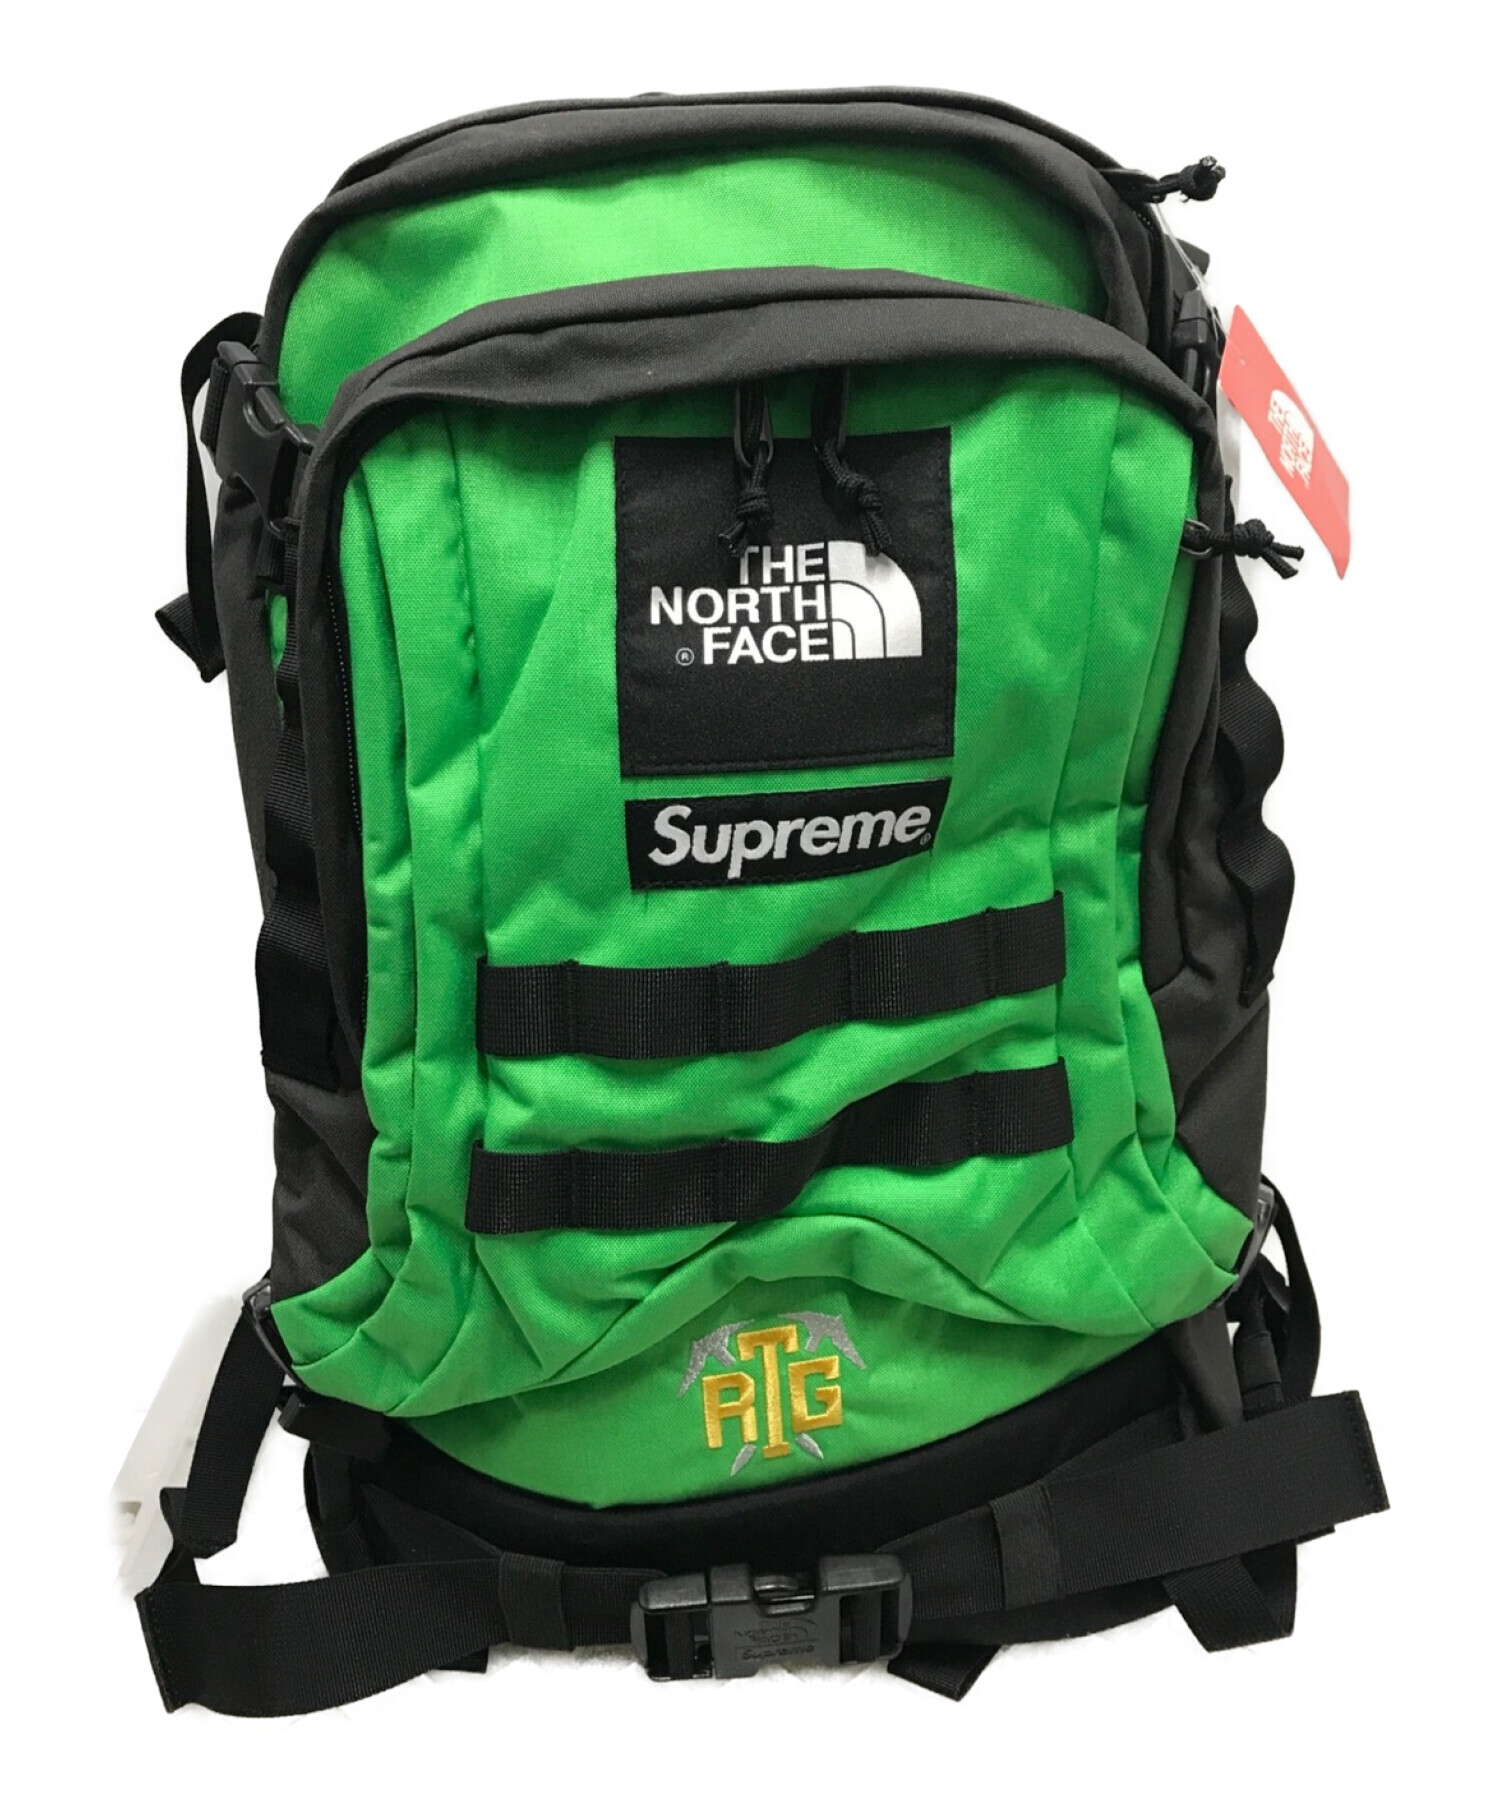 THE NORTH FACE (ザ ノース フェイス) Supreme (シュプリーム) RTG Backpack グリーン 未使用品